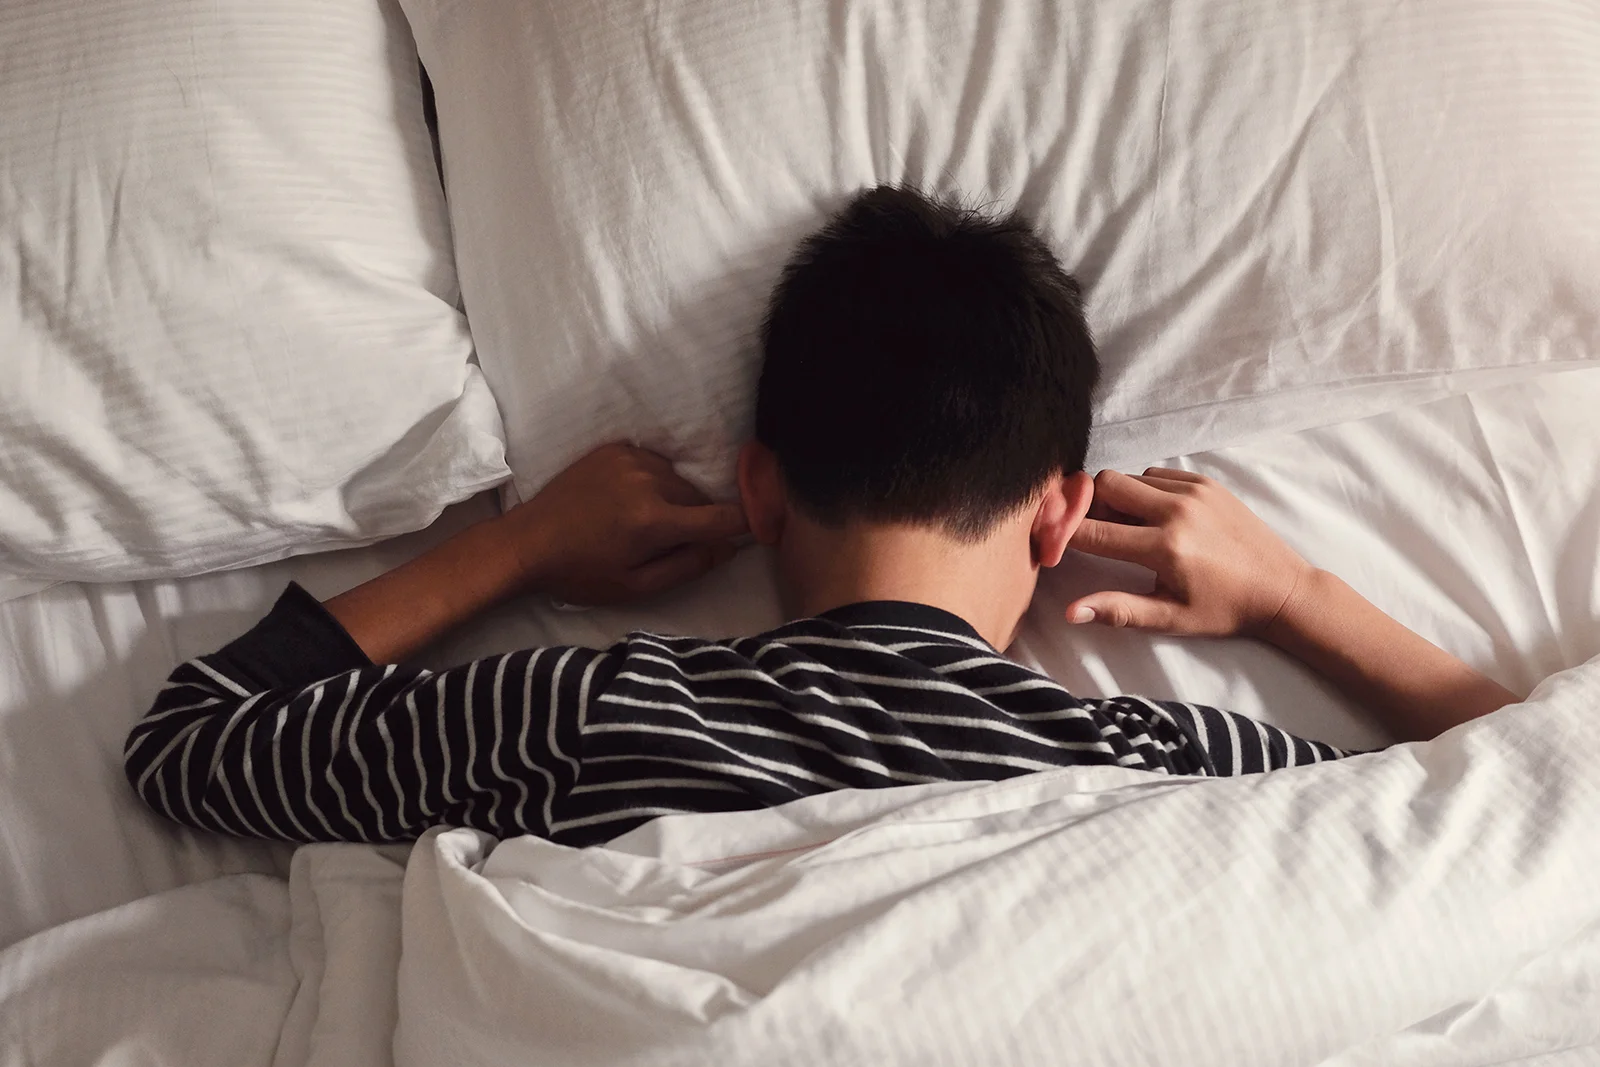 Preteen tween boy covering ears with his fingers in bed